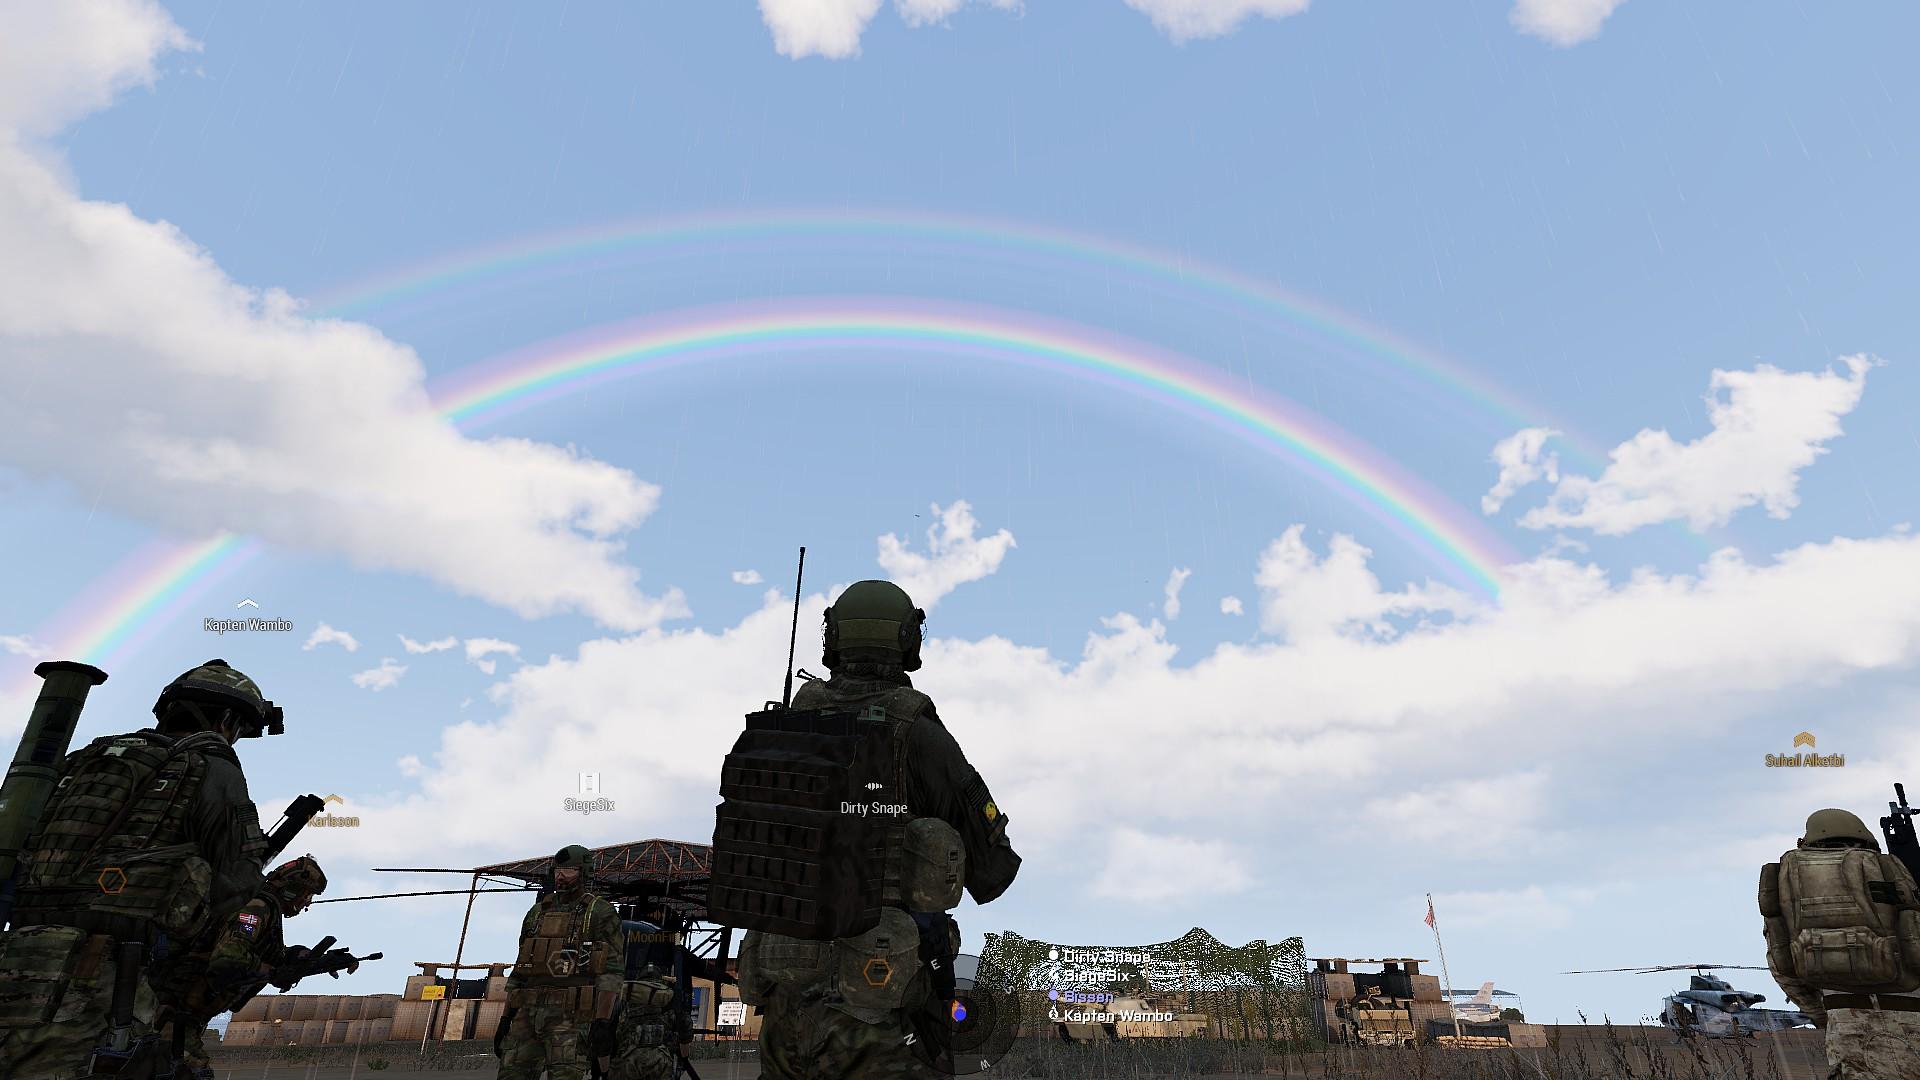 Double rainbow. wow